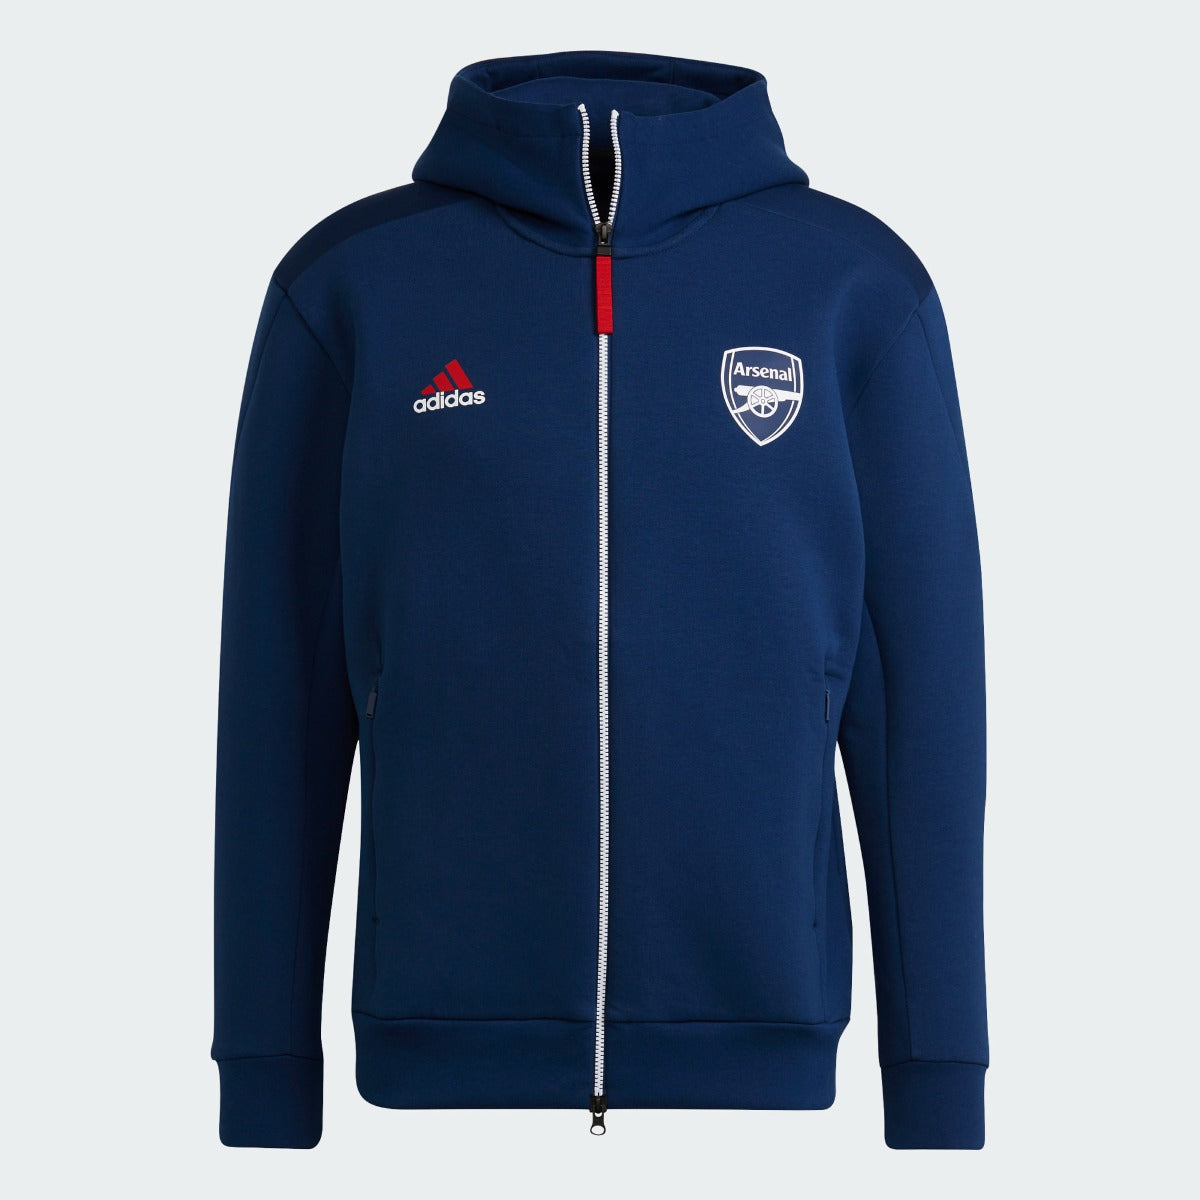 Adidas 2021-22 Arsenal Z.N.E Anthem Jacket - Mystery Blue-Scarlet (Front)